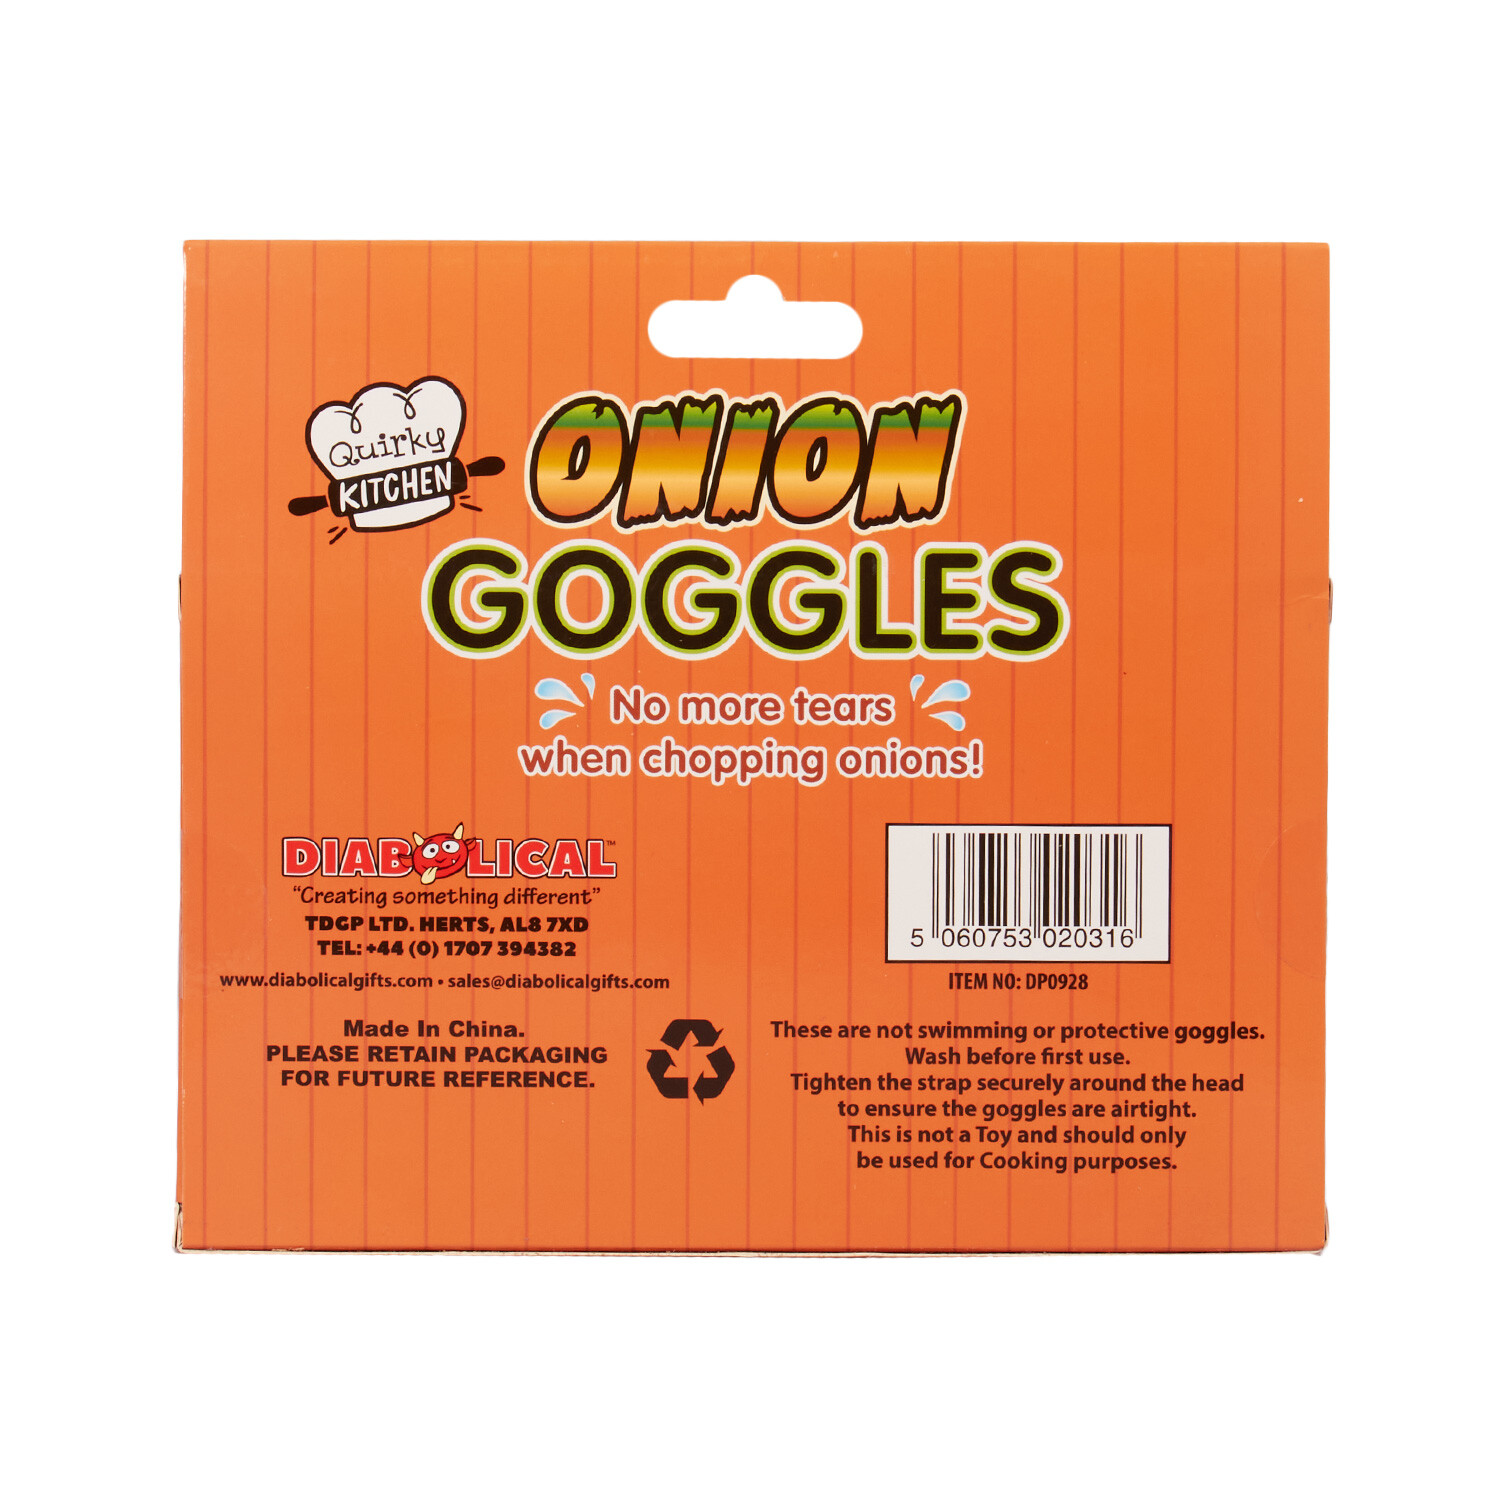 G&G Onion Goggles Image 5